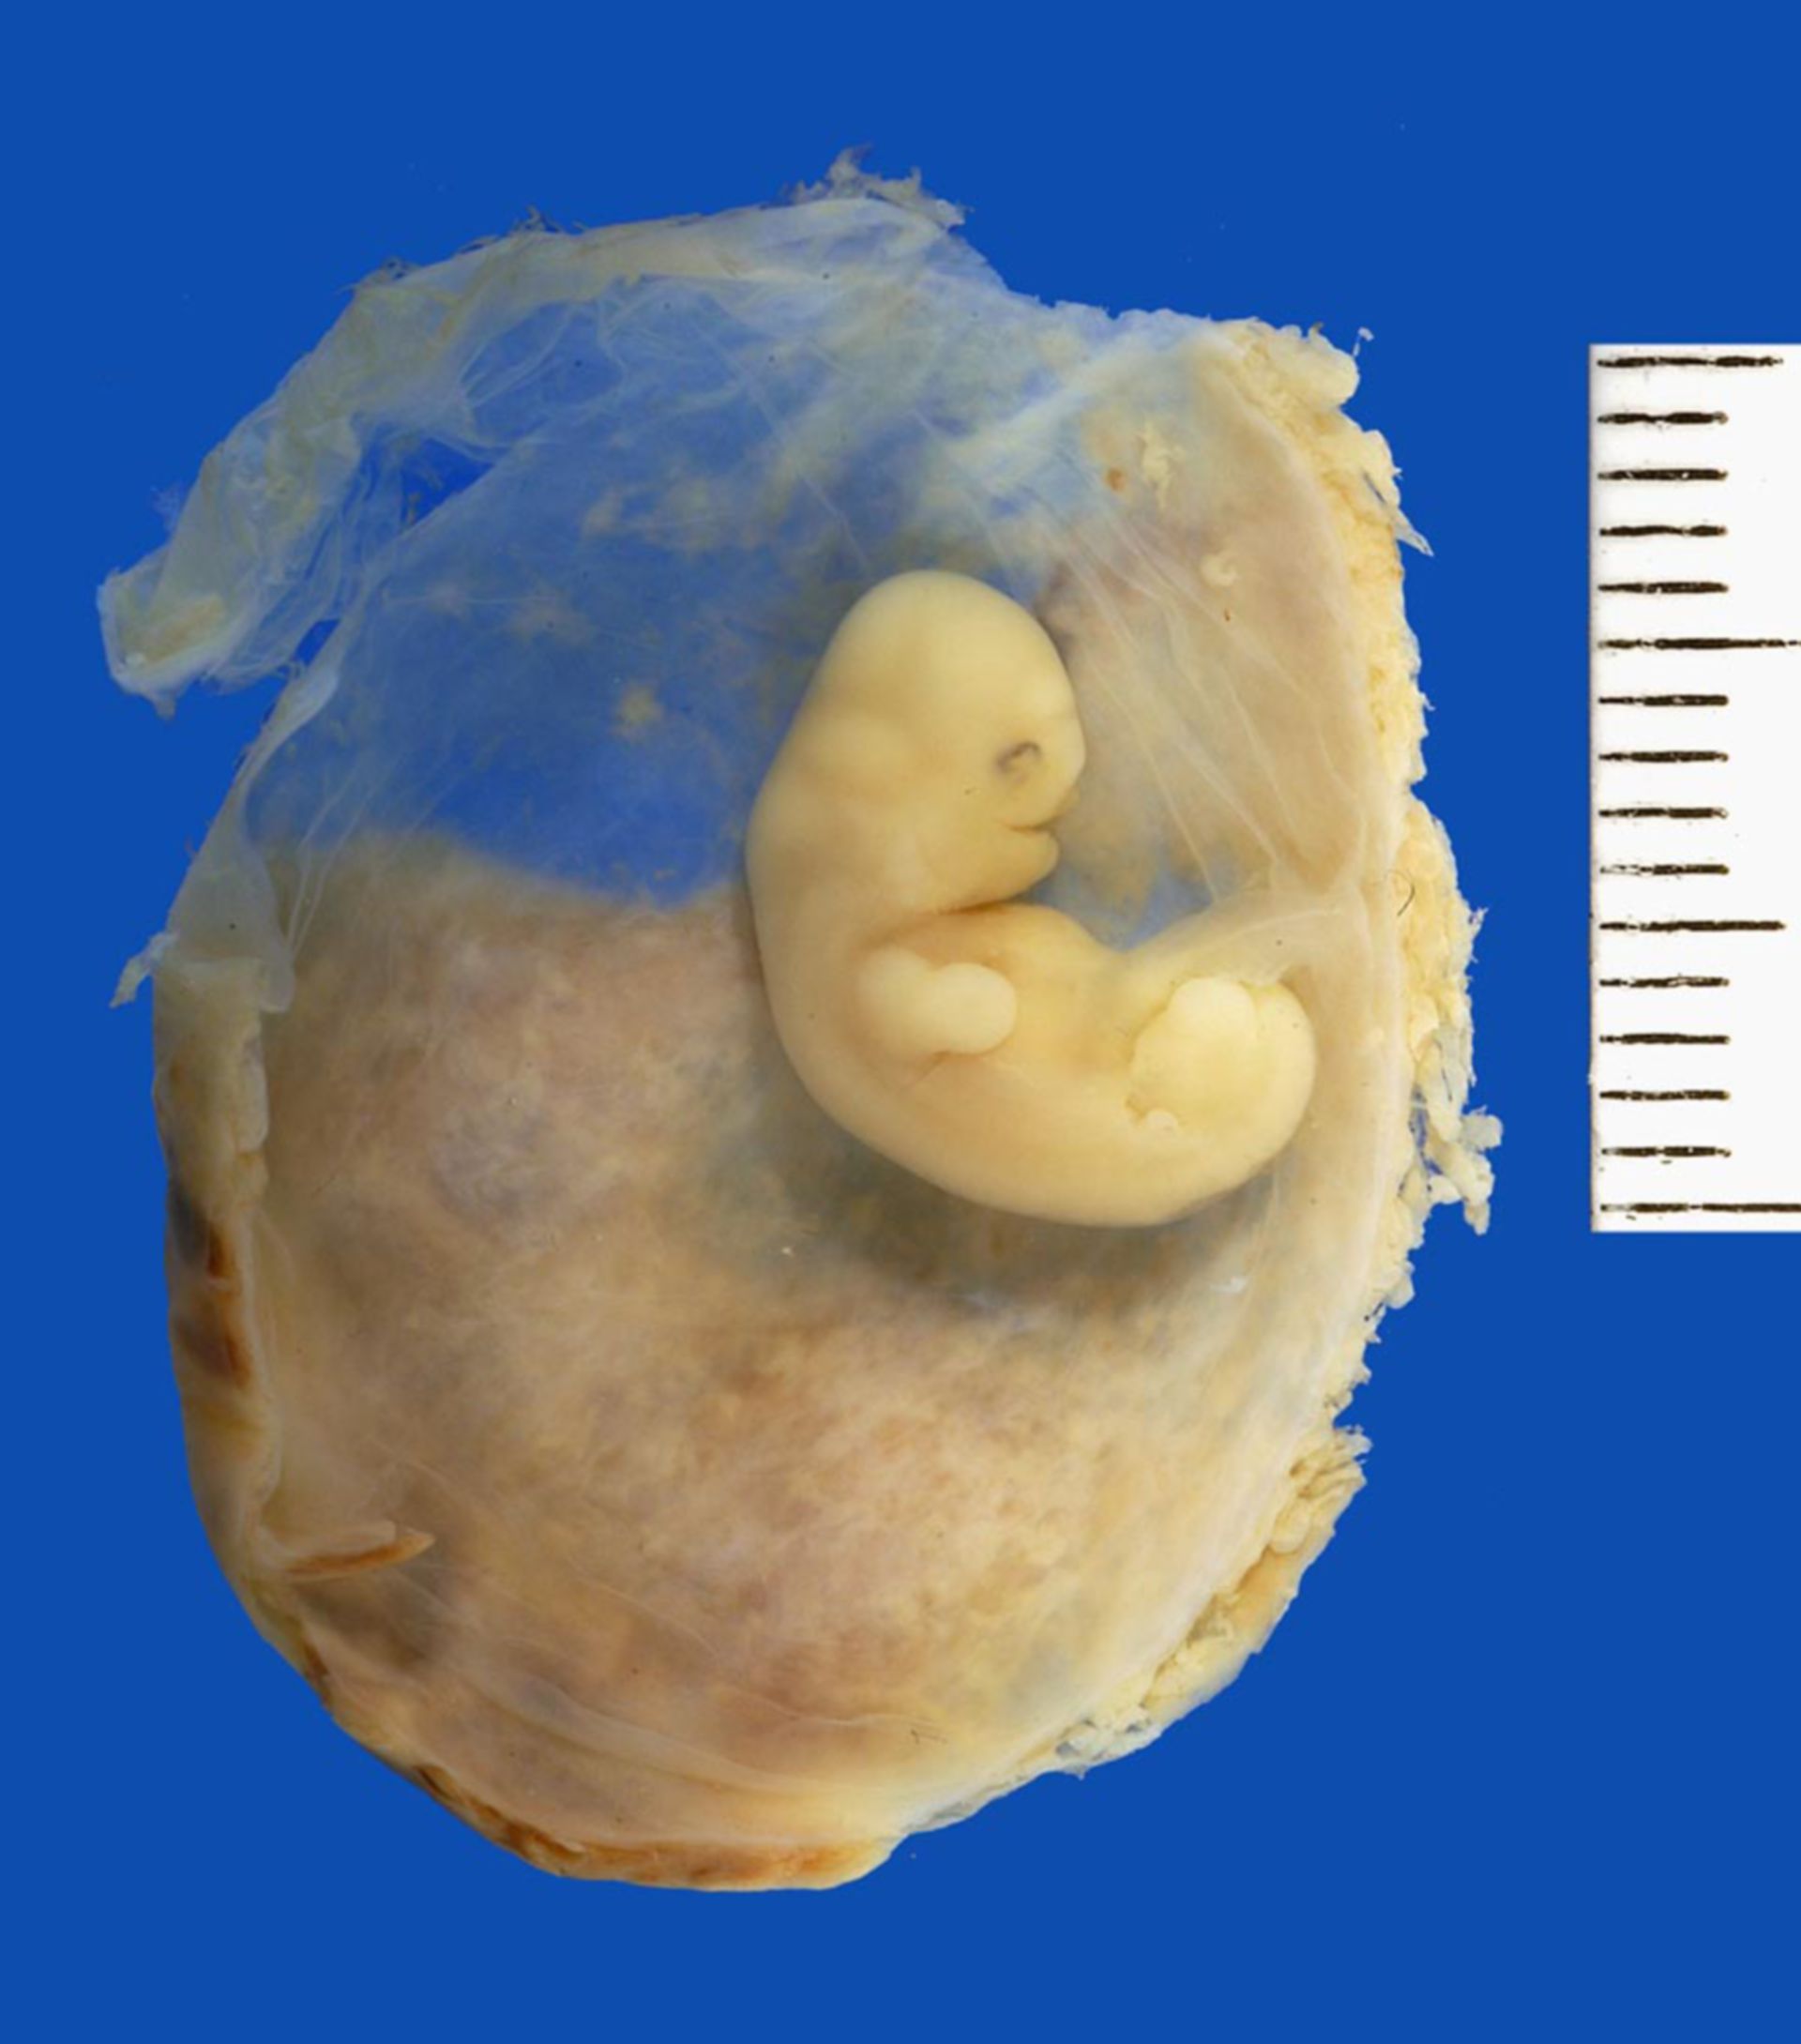 Embryo in amniotic sac